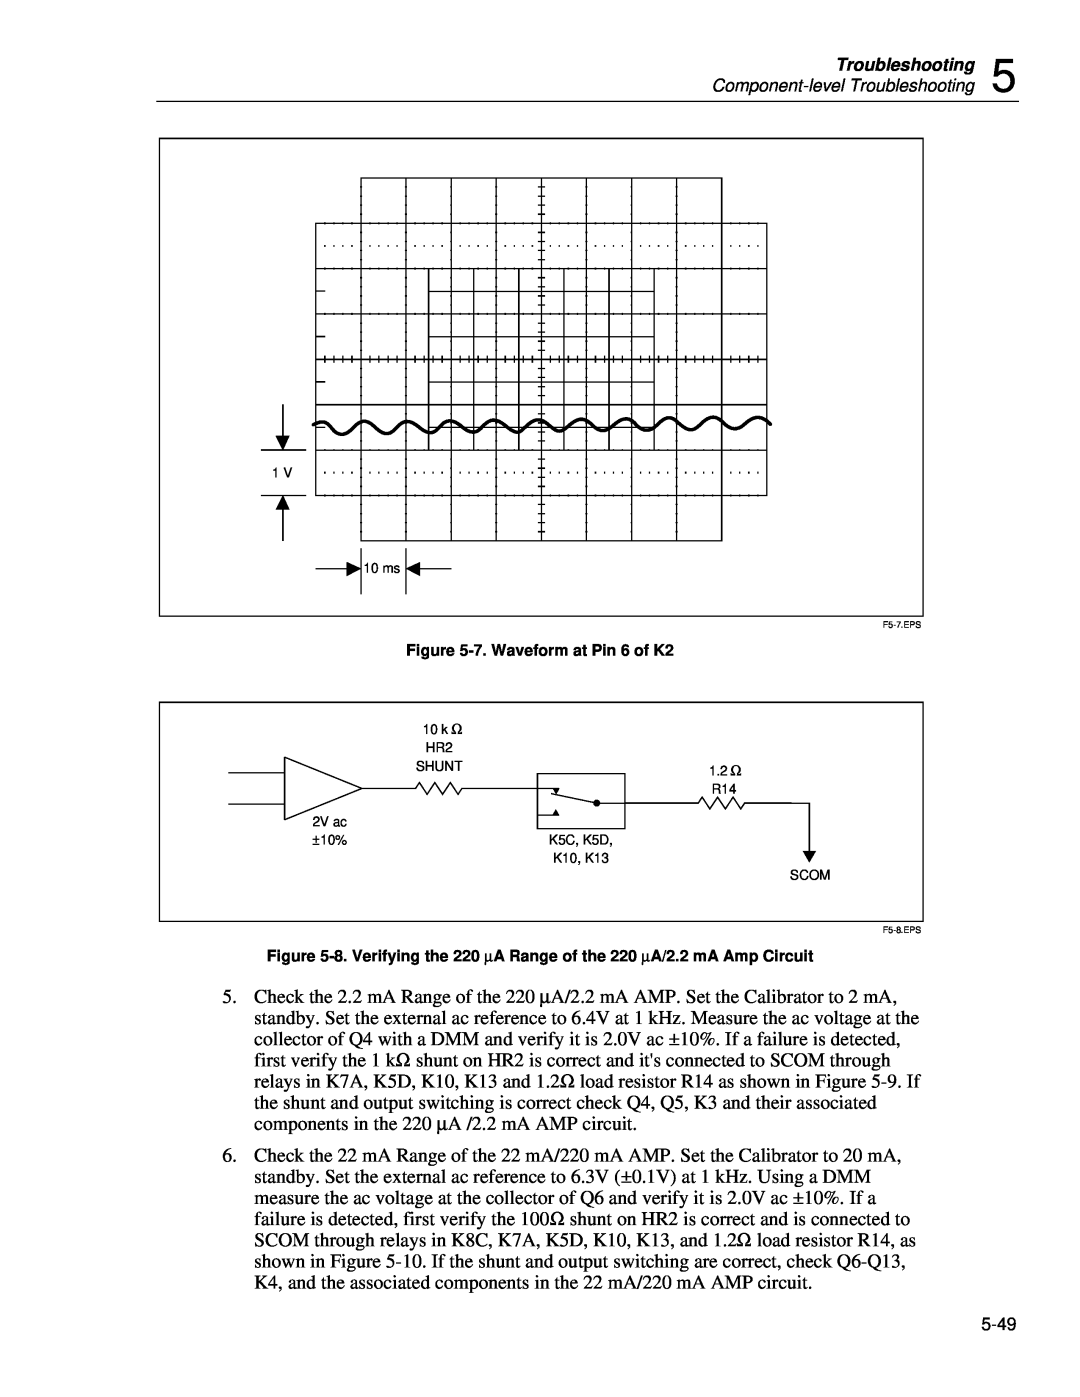 Fluke 5720A service manual 7. Waveform at Pin 6 of K2, 1.2 Ω, K5C, K5D, K10, K13 